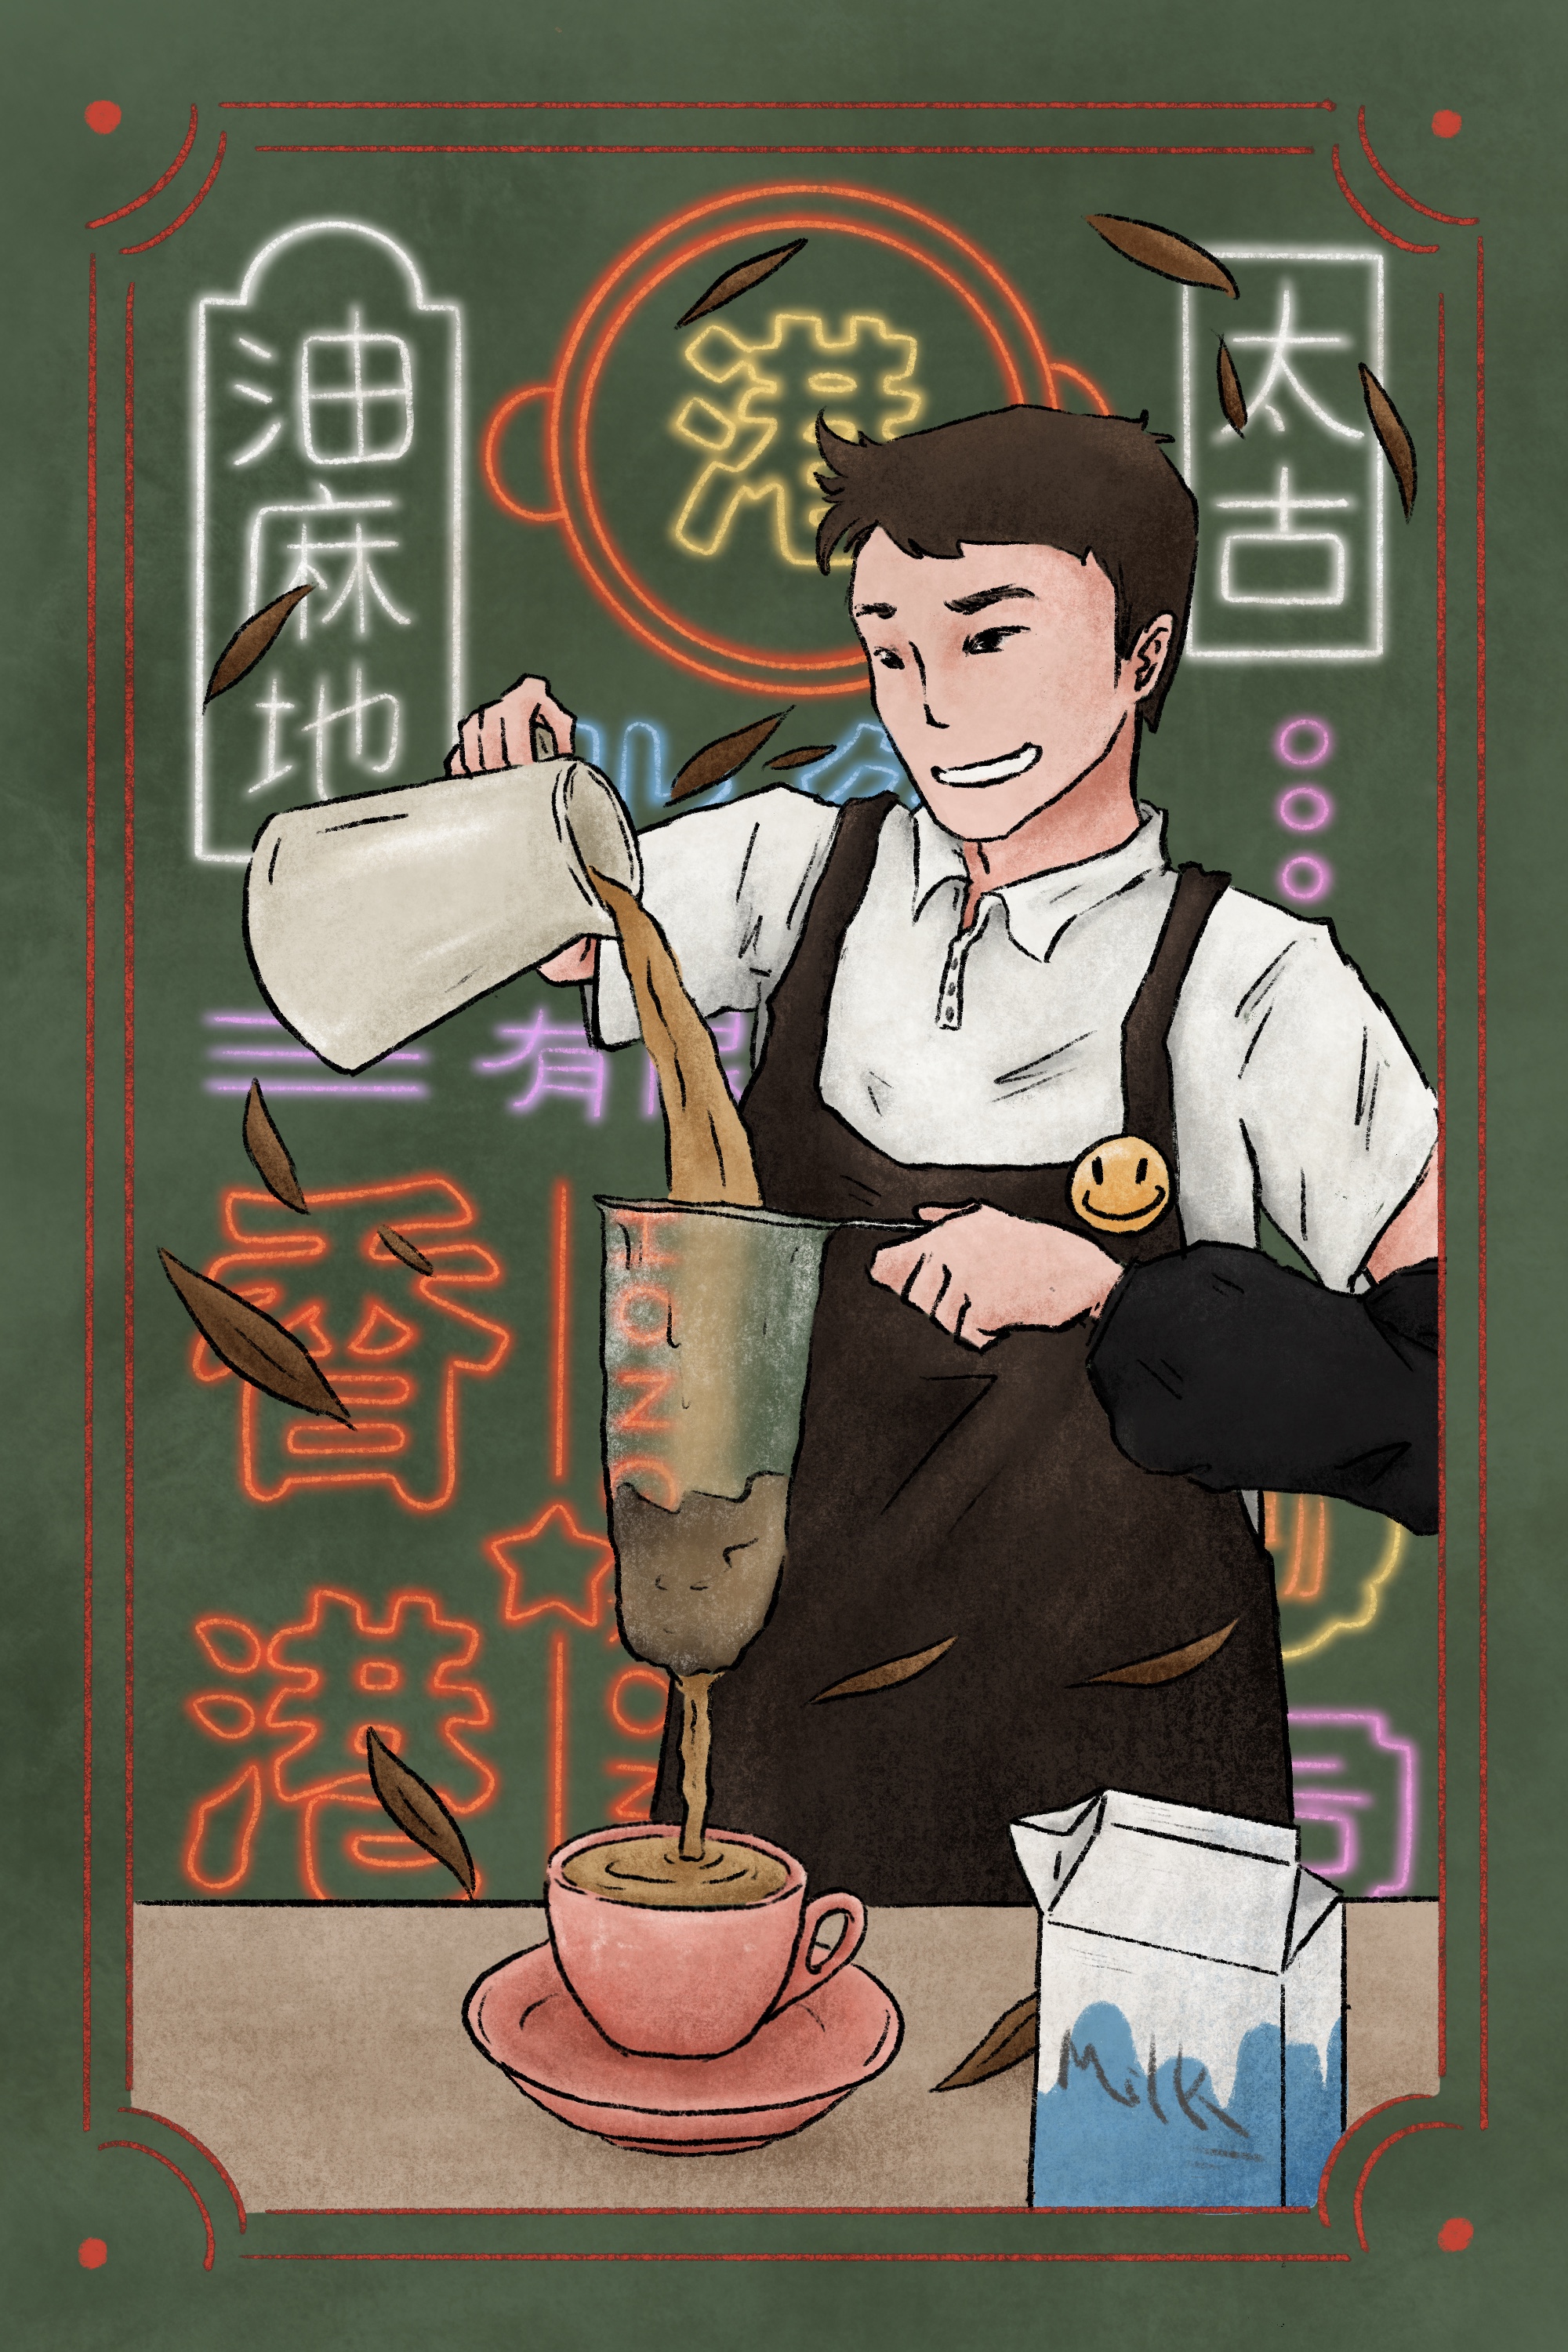 Traditional - HongKong milk tea